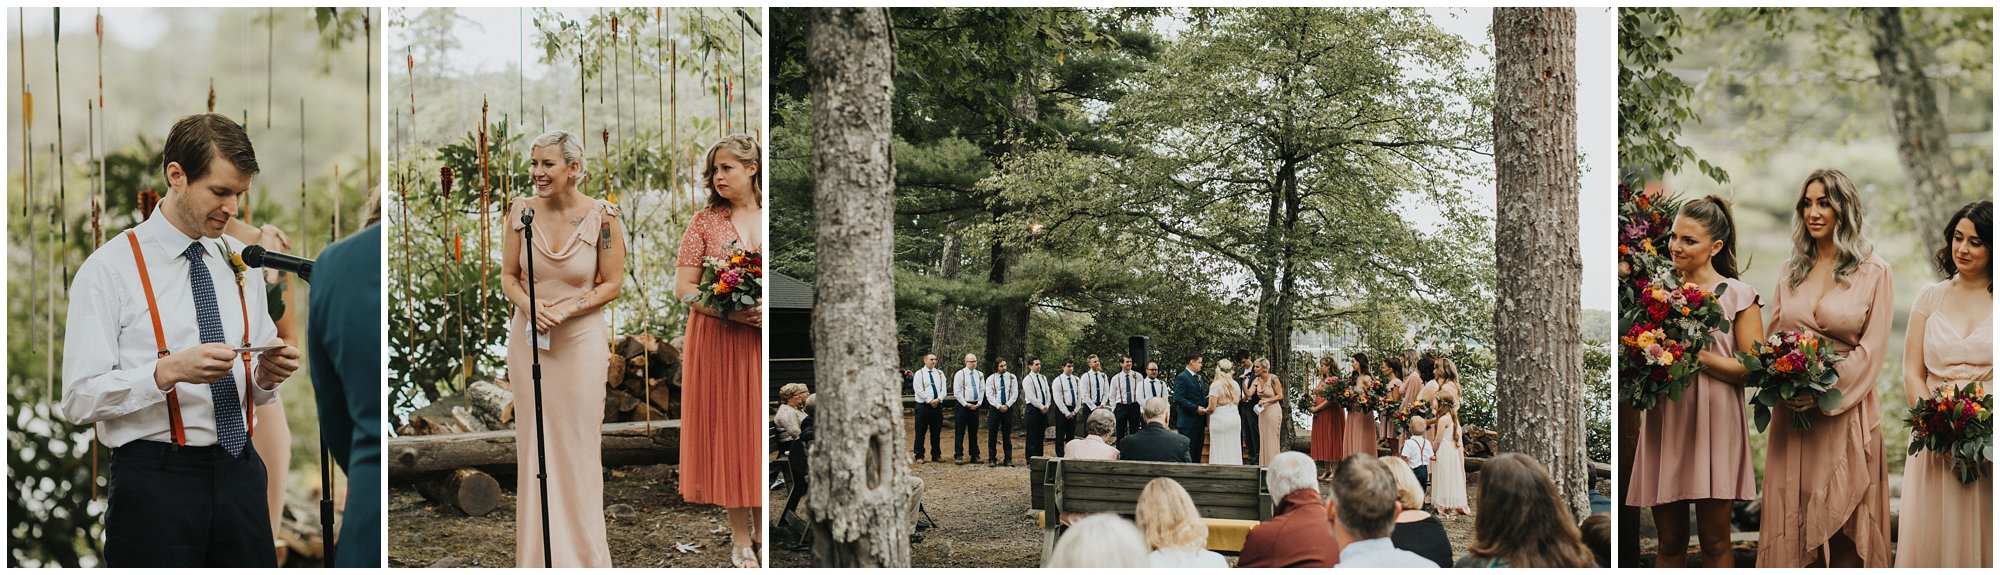 camp oneka wedding,philadelphia photographer, forest wedding ceremony